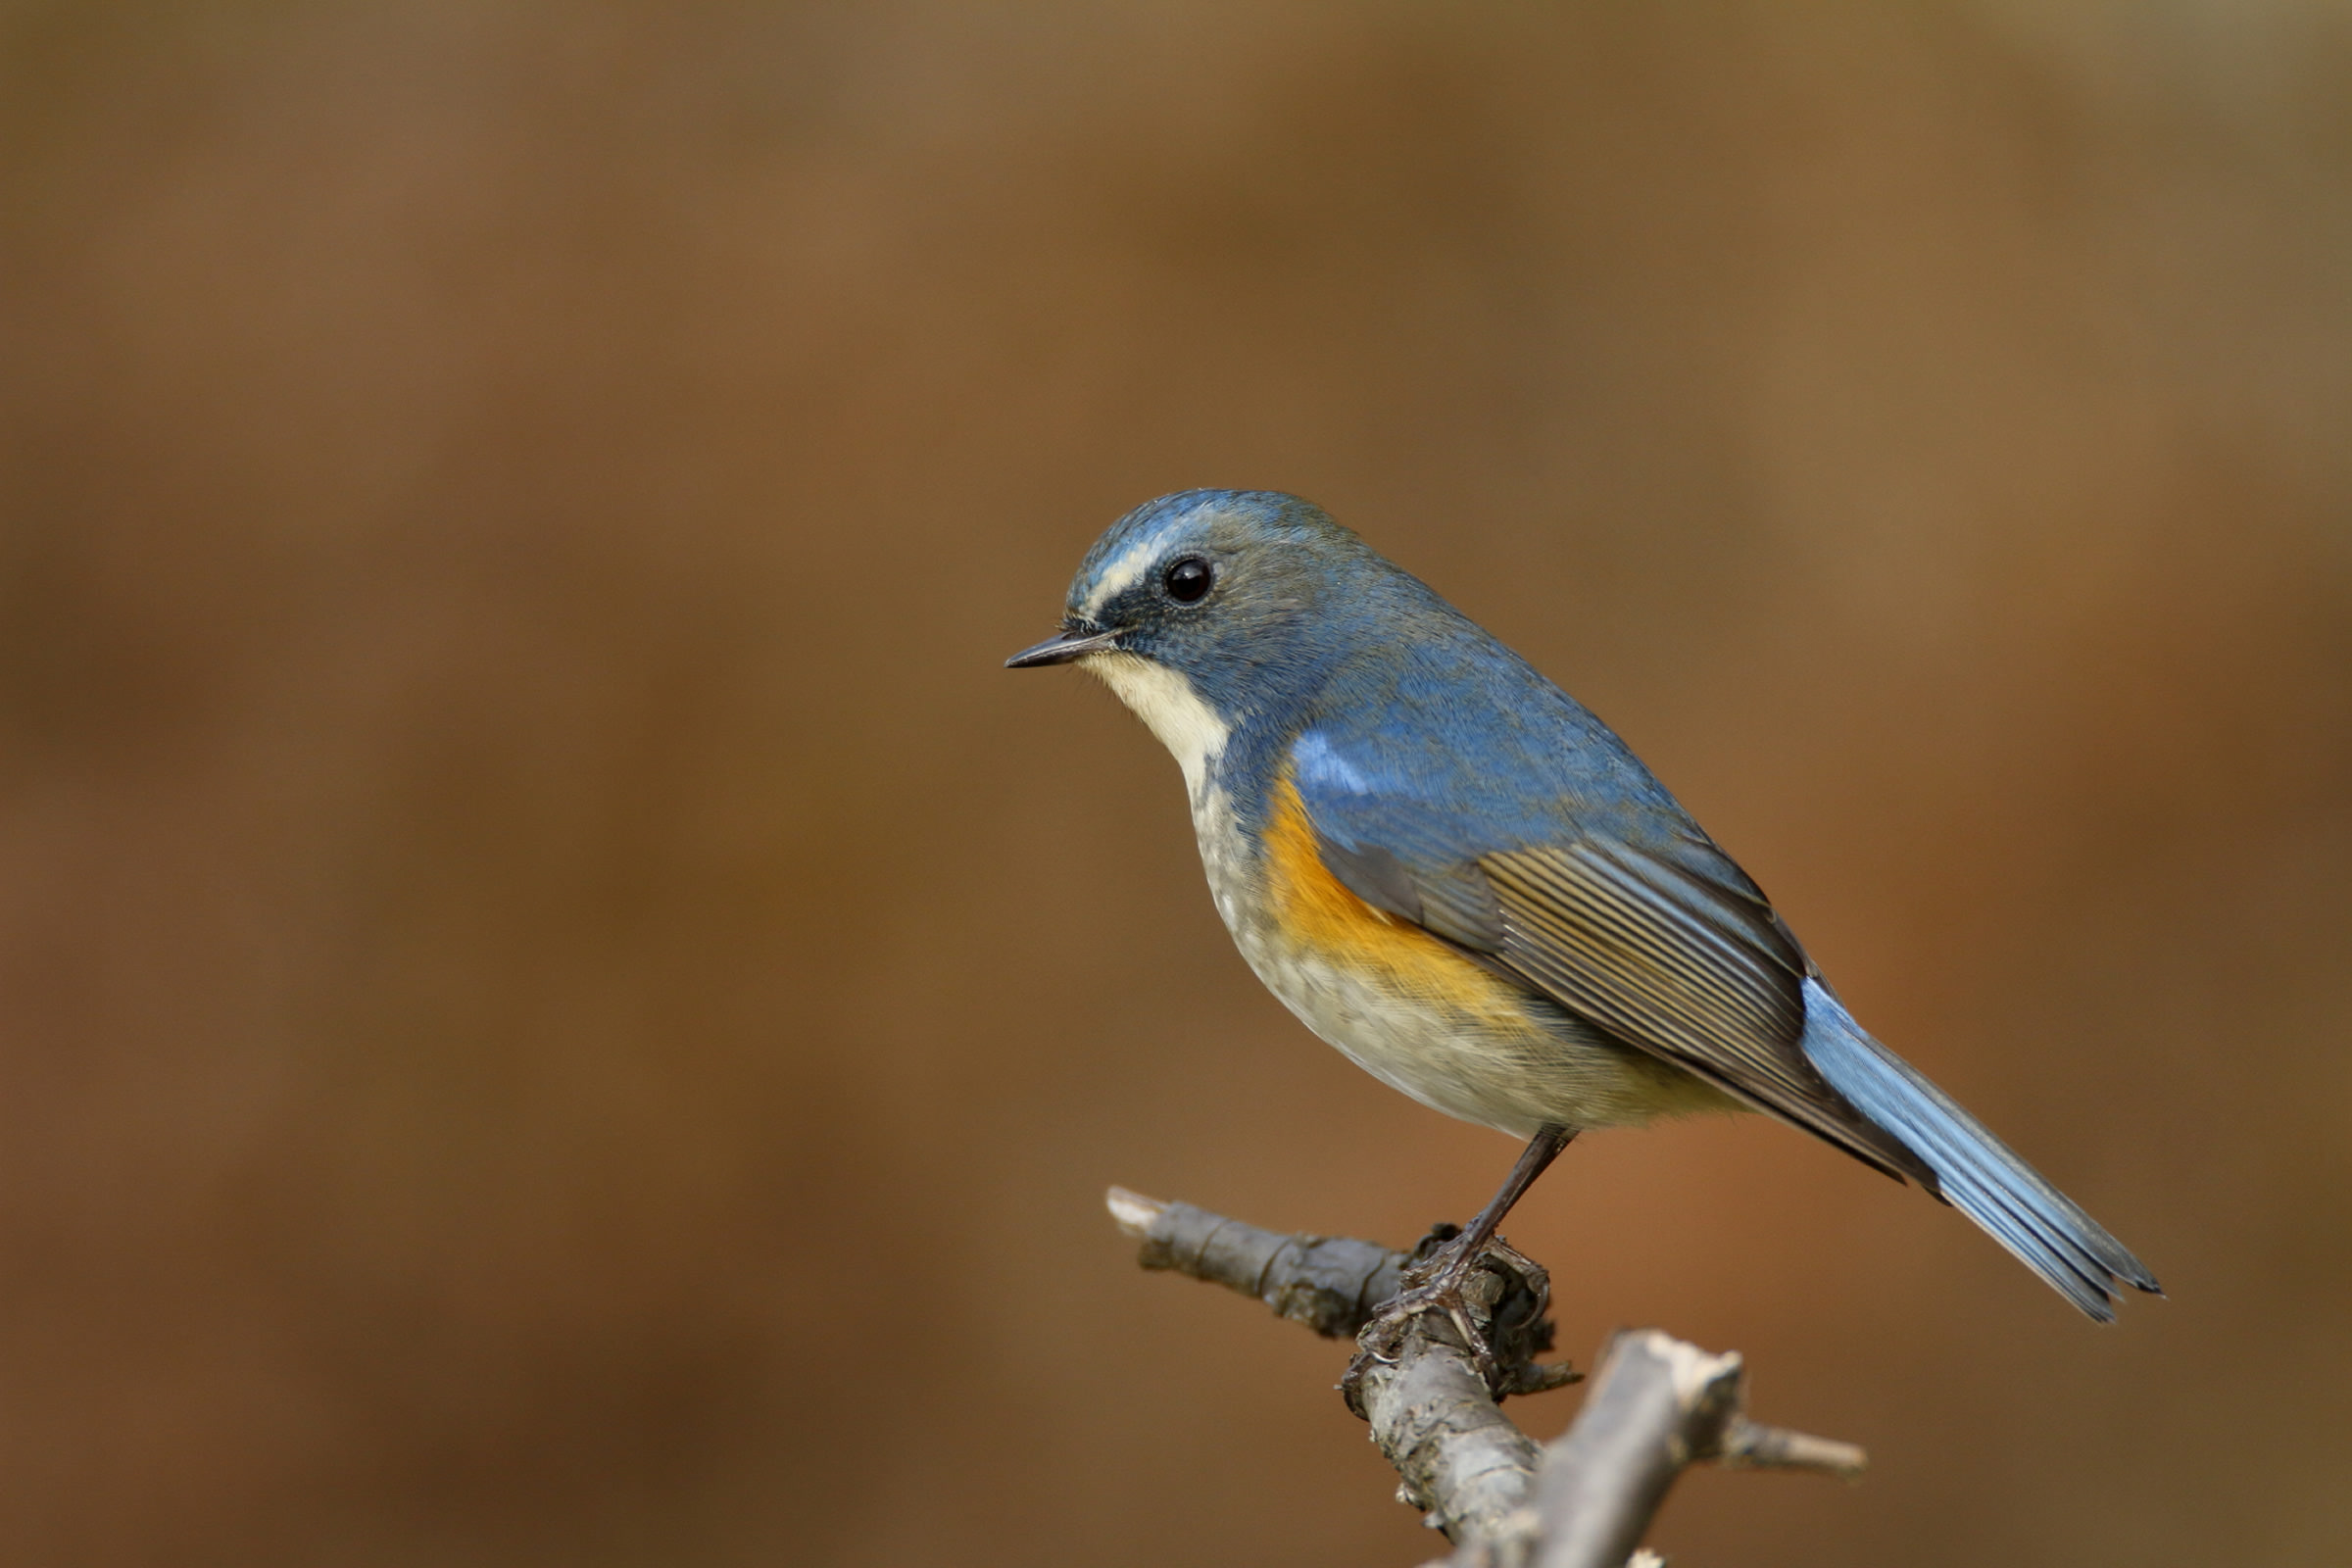 Canon Bird Branch Project, Biodiversity Initiatives